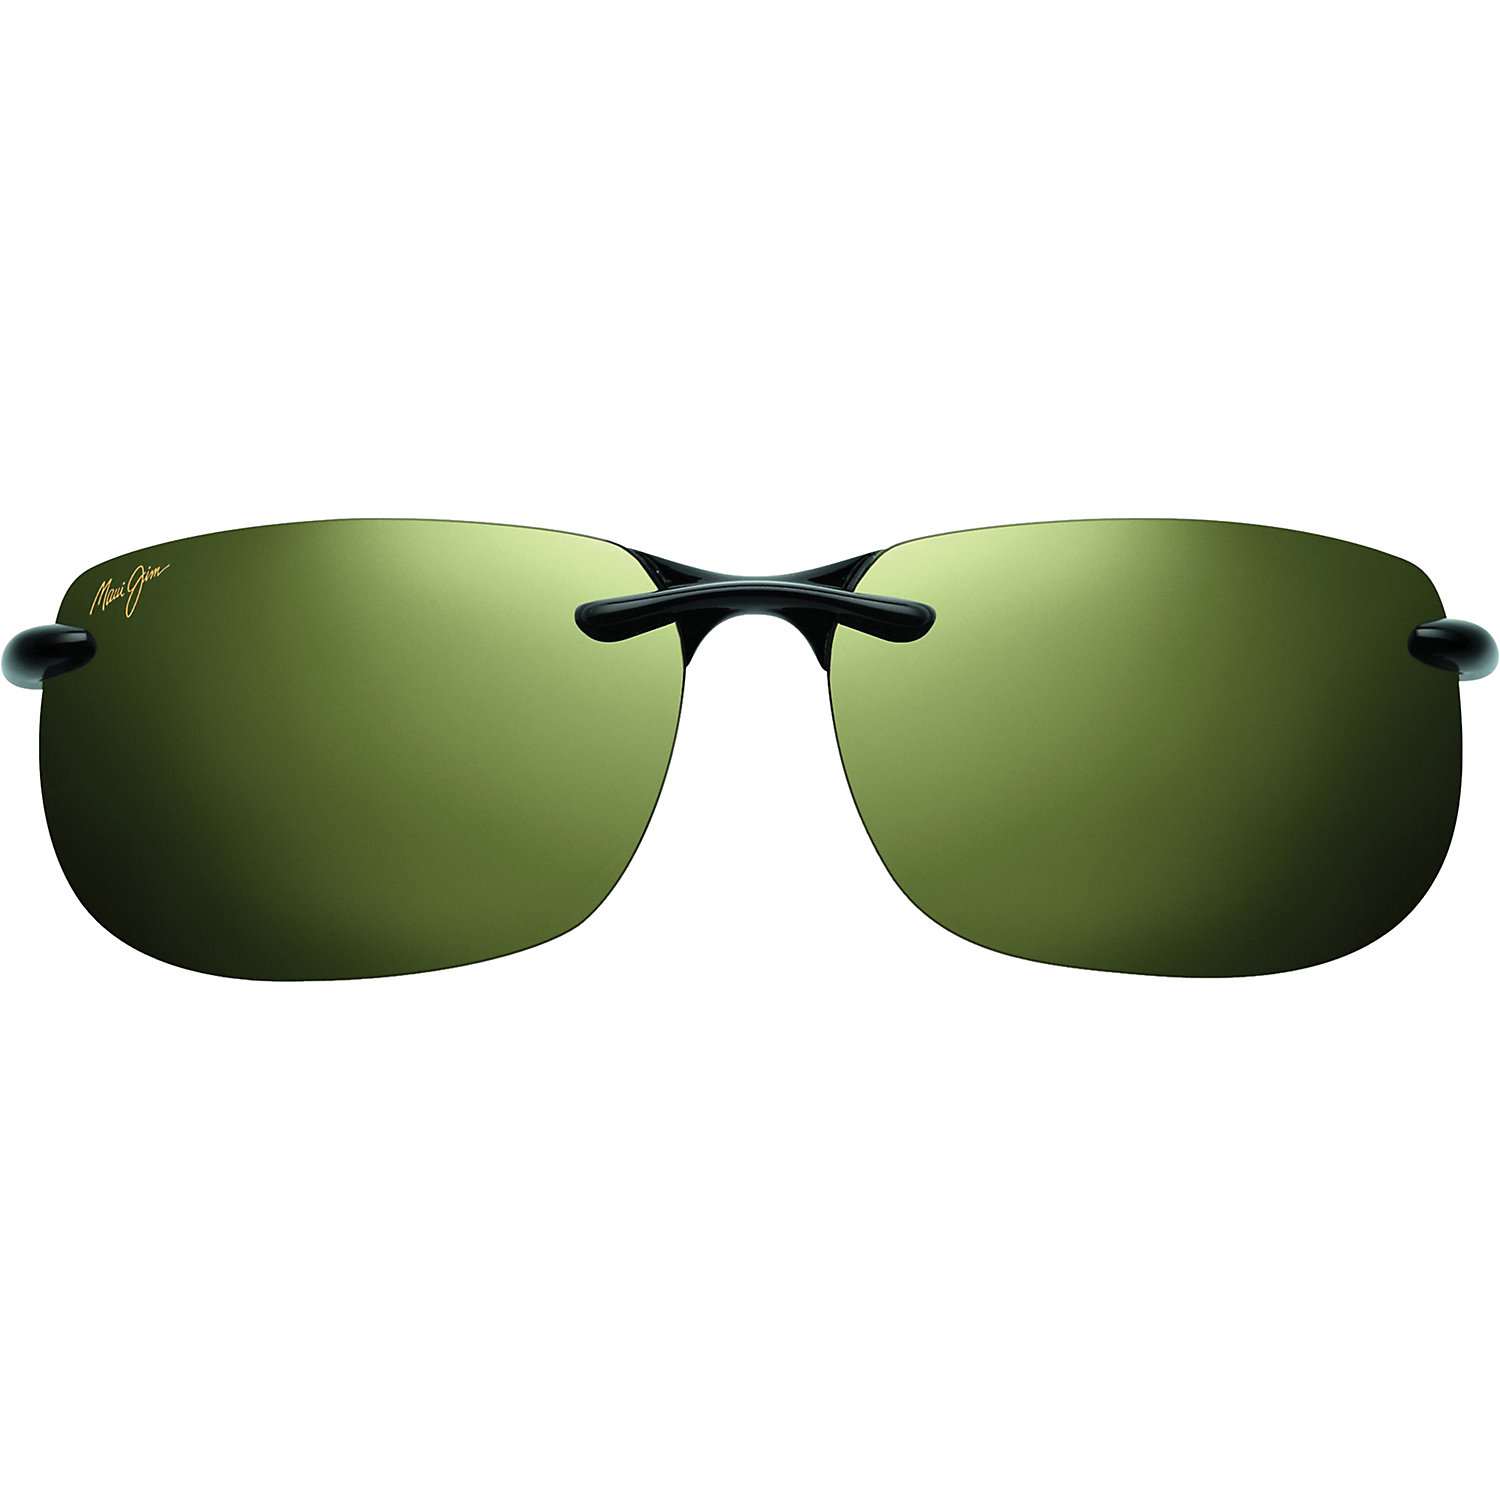 Maui Jim Banyans Polarized Sunglasses - Universal Fit